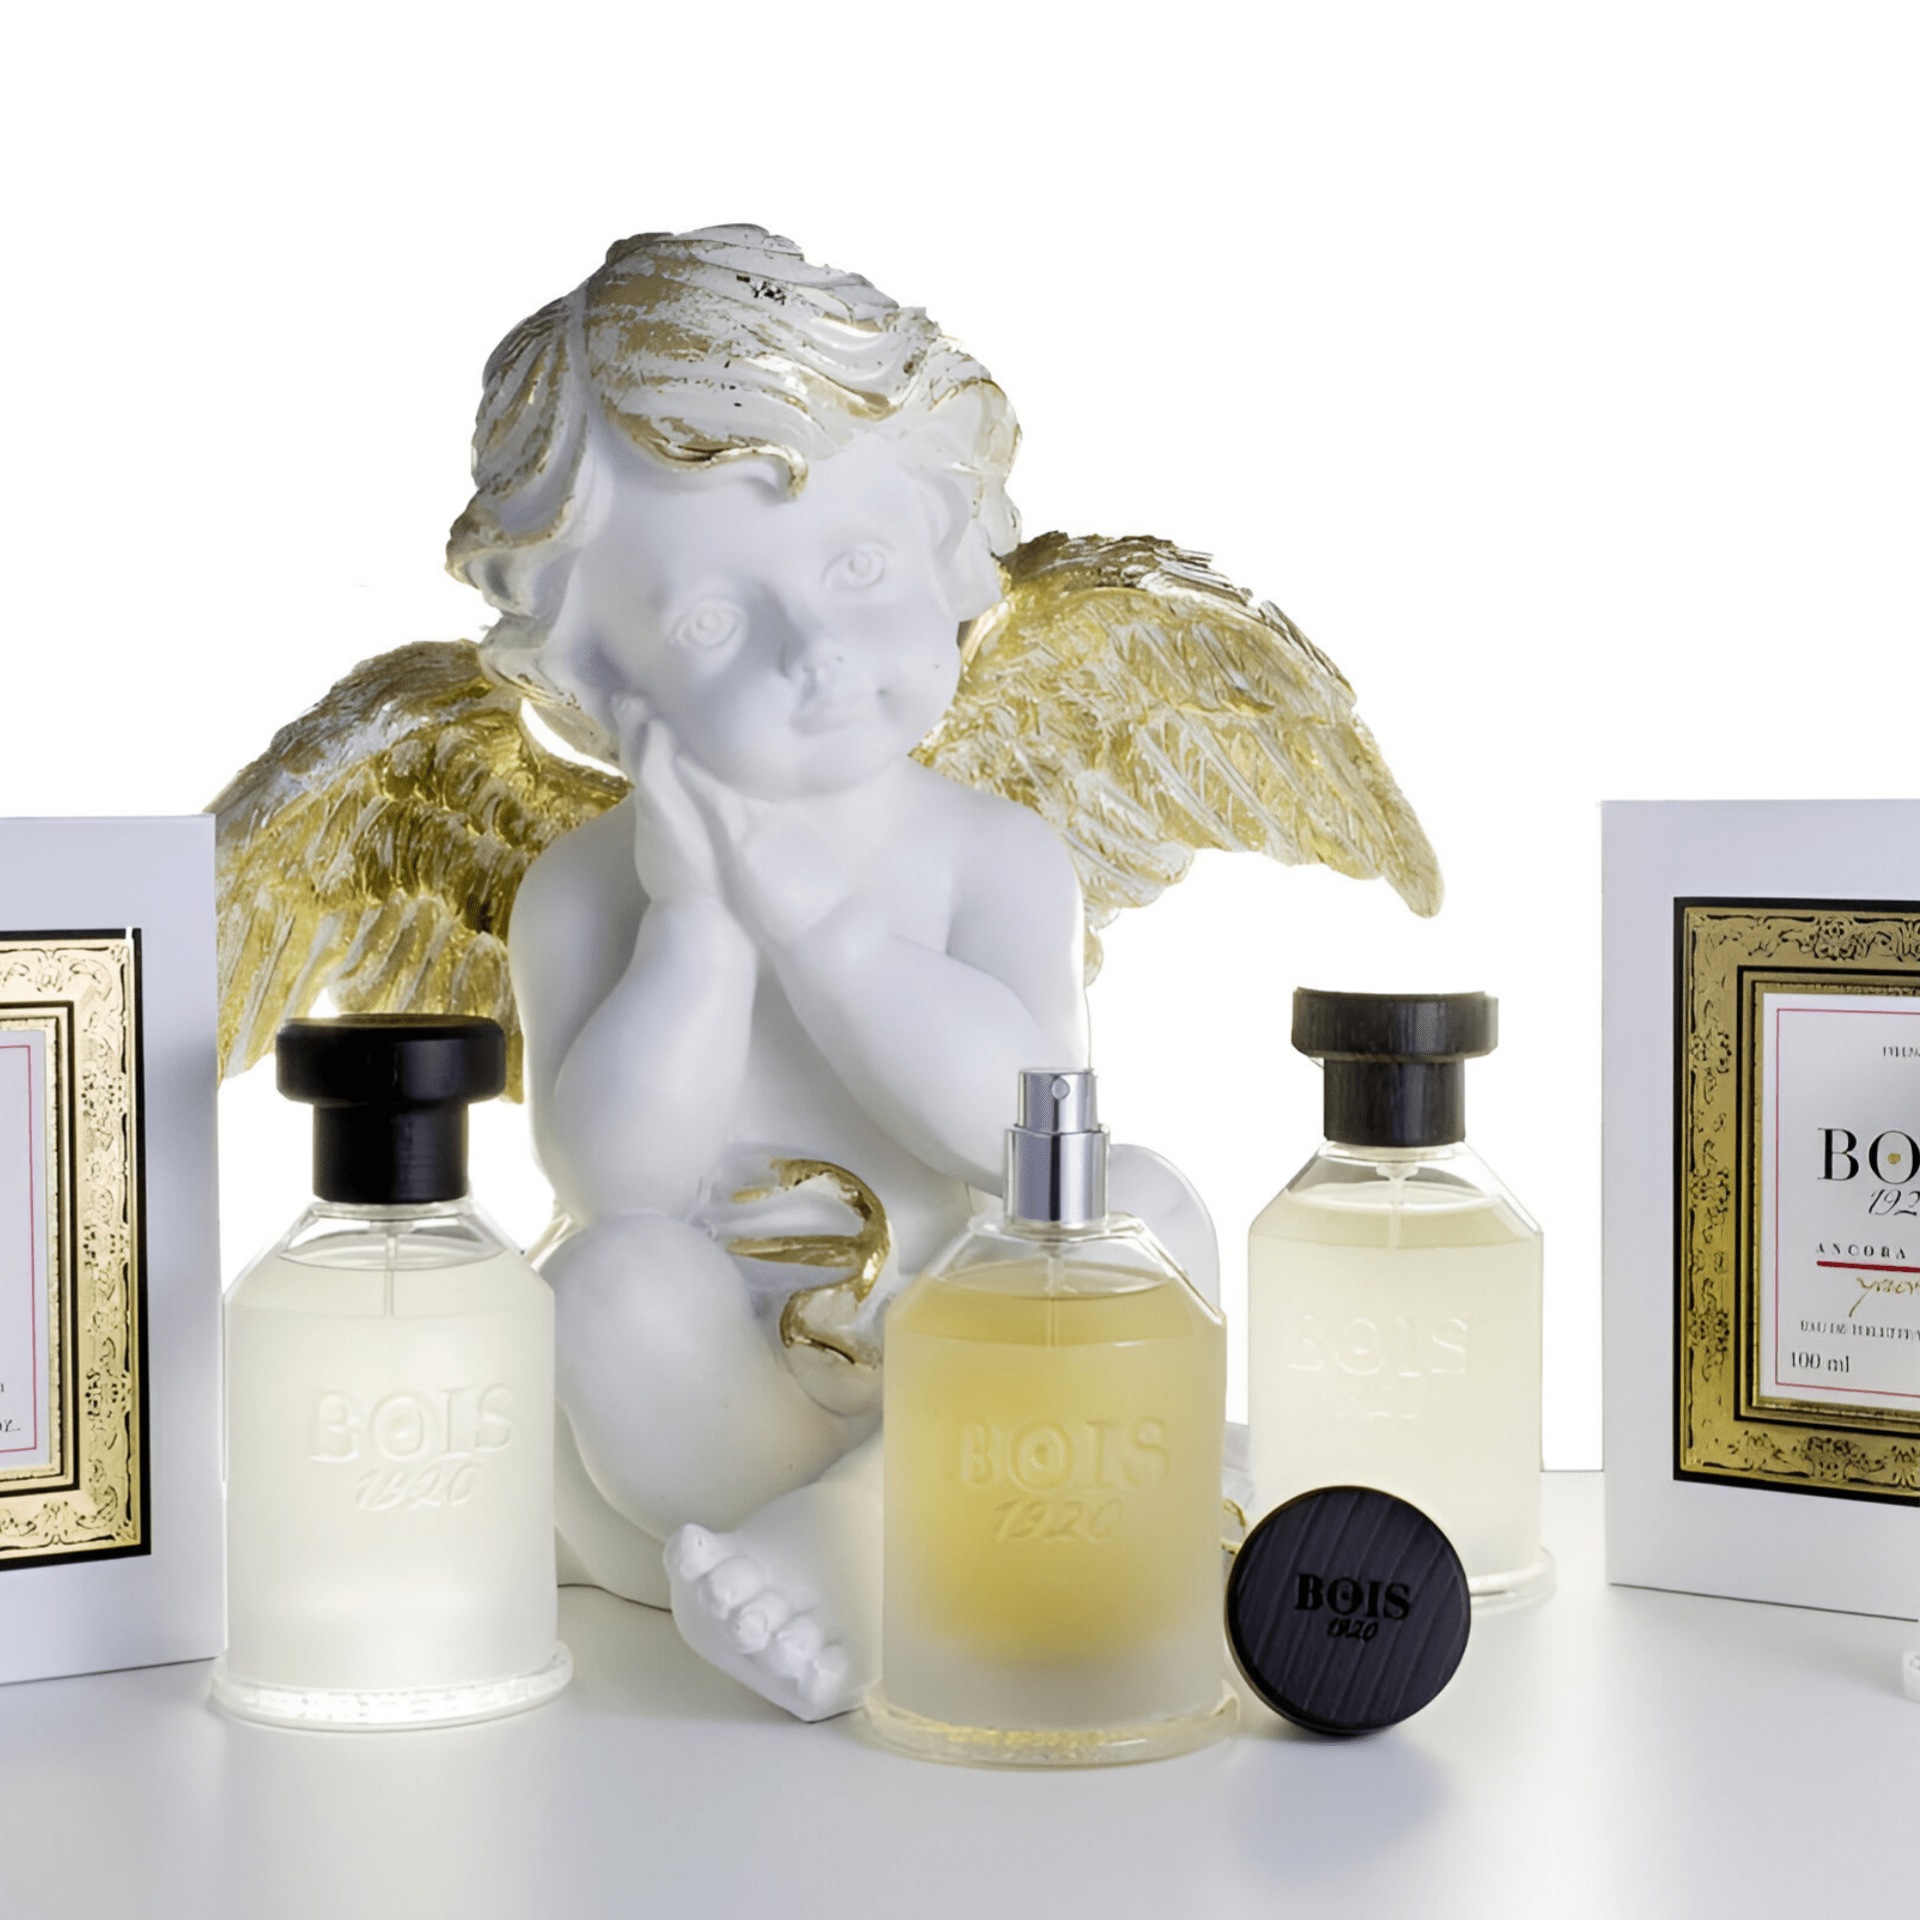 Bois 1920 Sopra Il Mare EDT | My Perfume Shop Australia